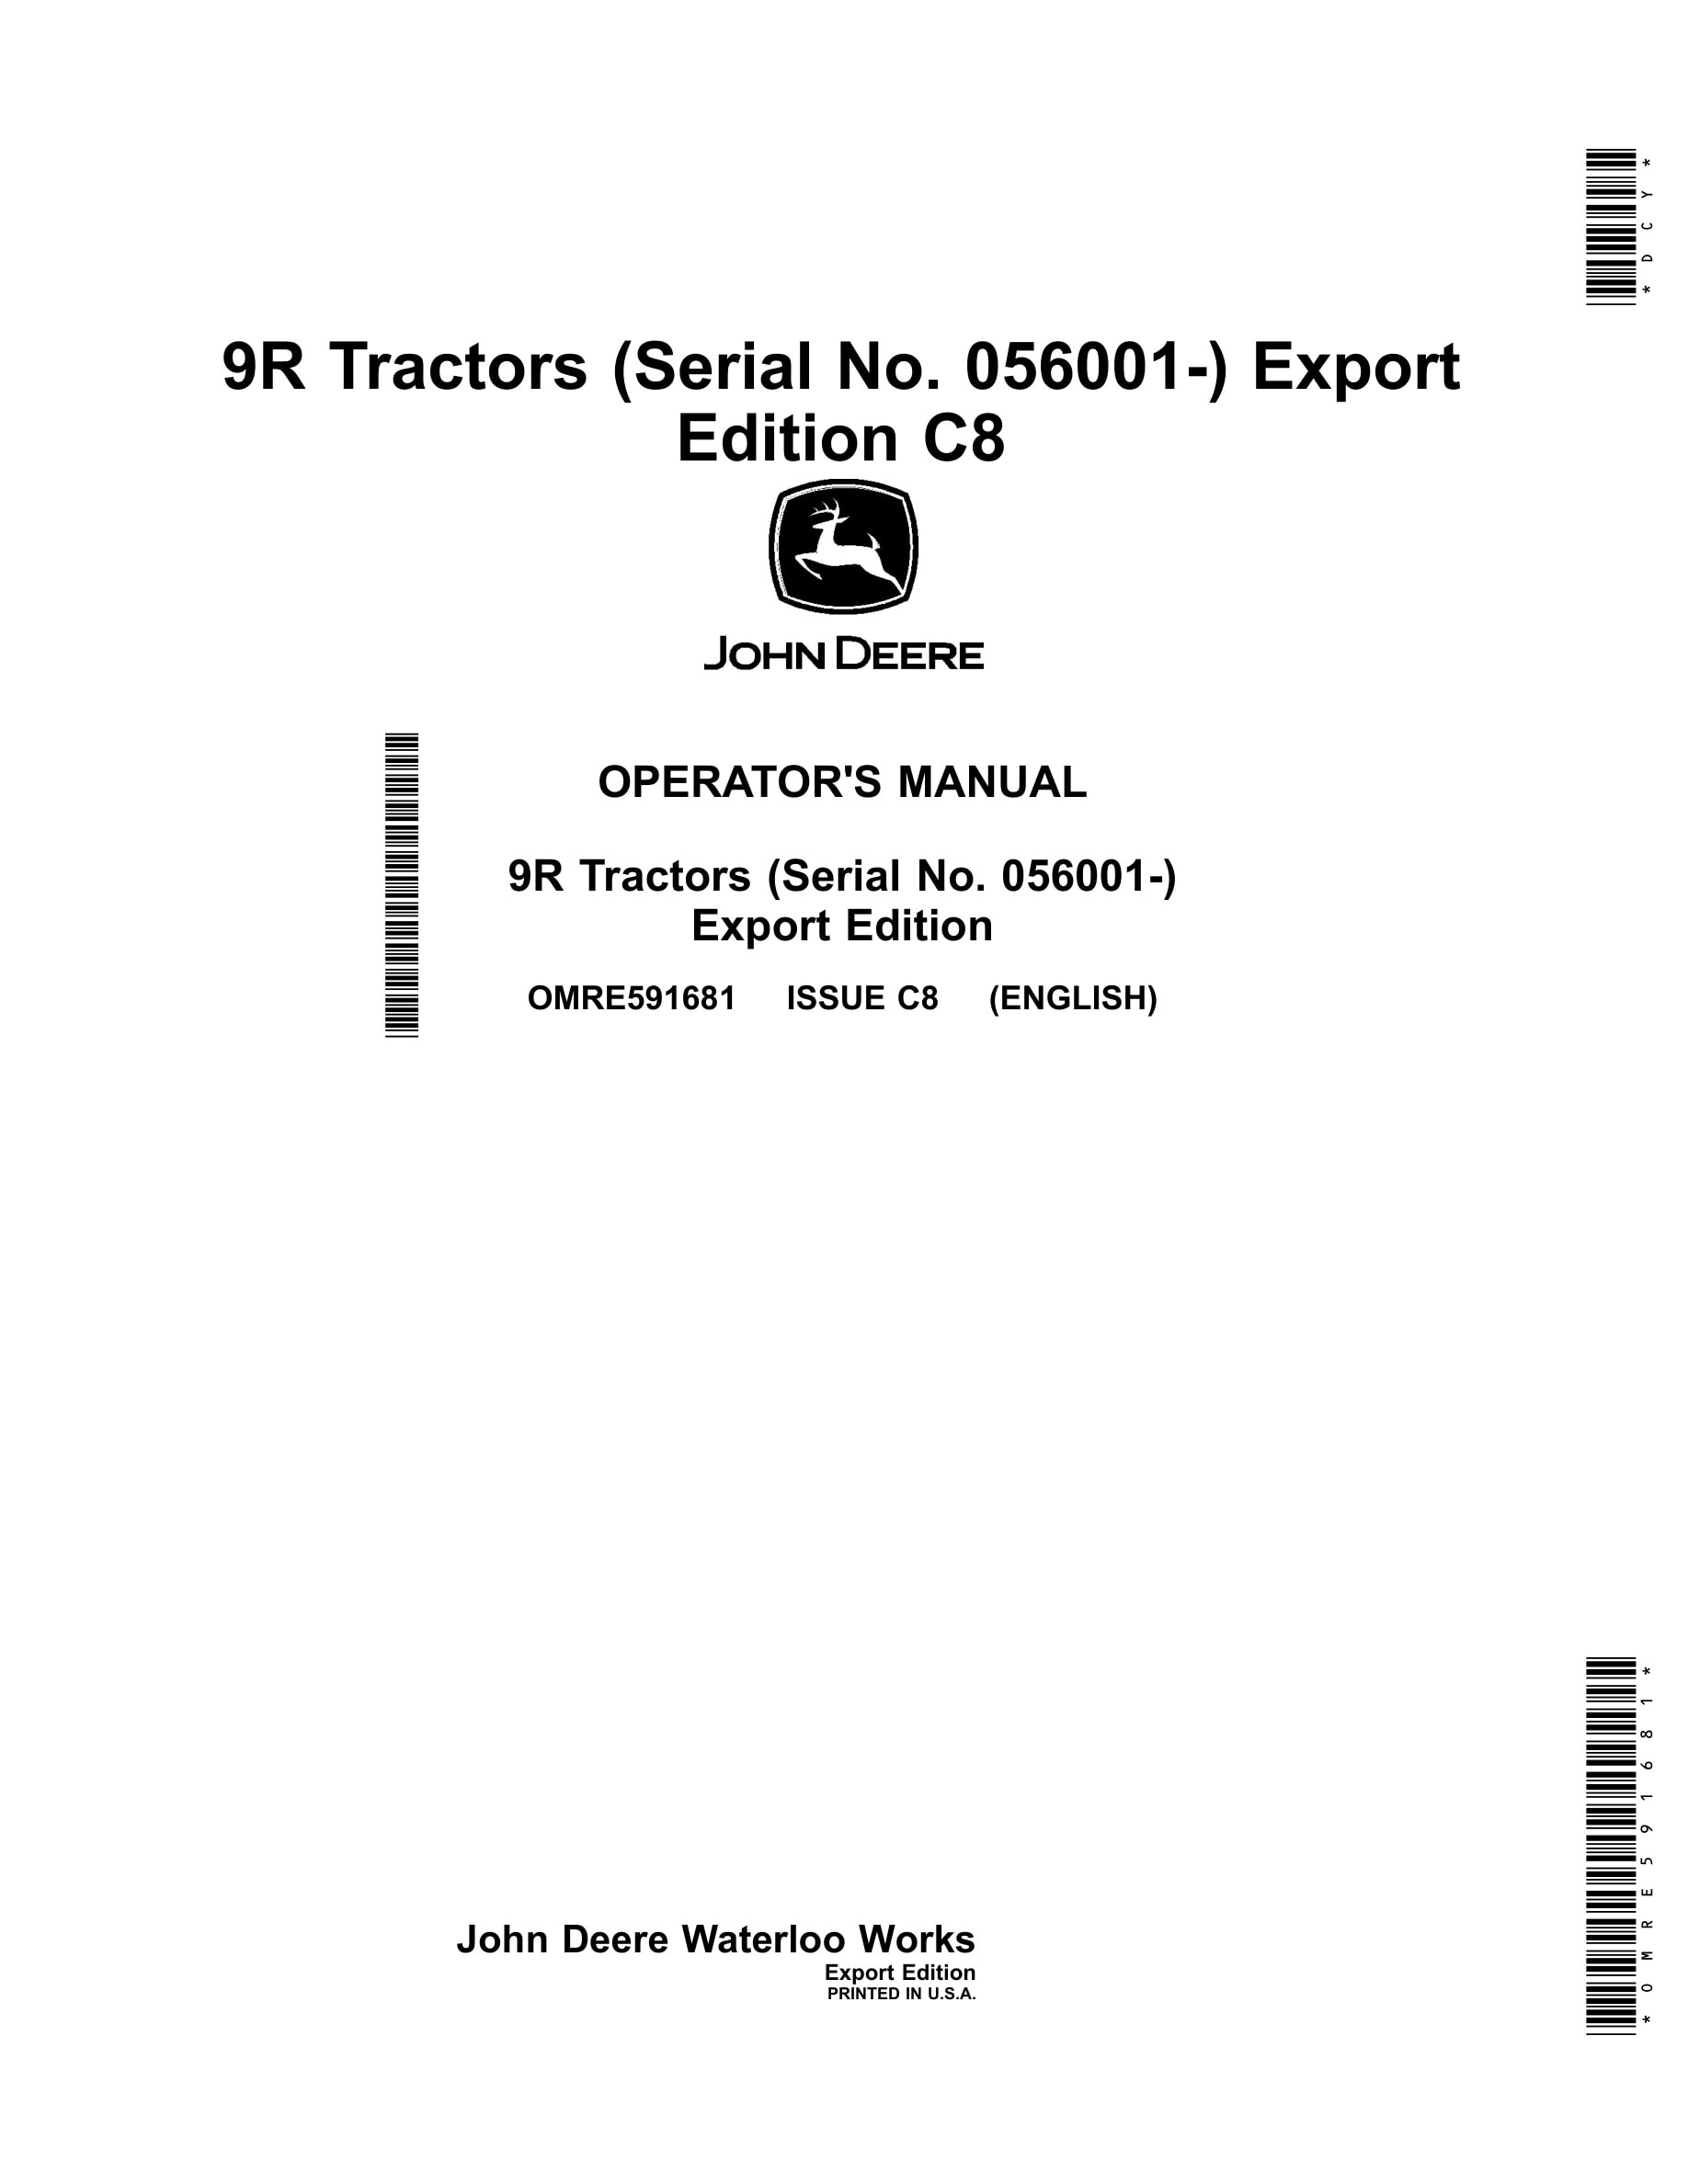 John Deere 9r Tractors Operator Manuals OMRE591681-1